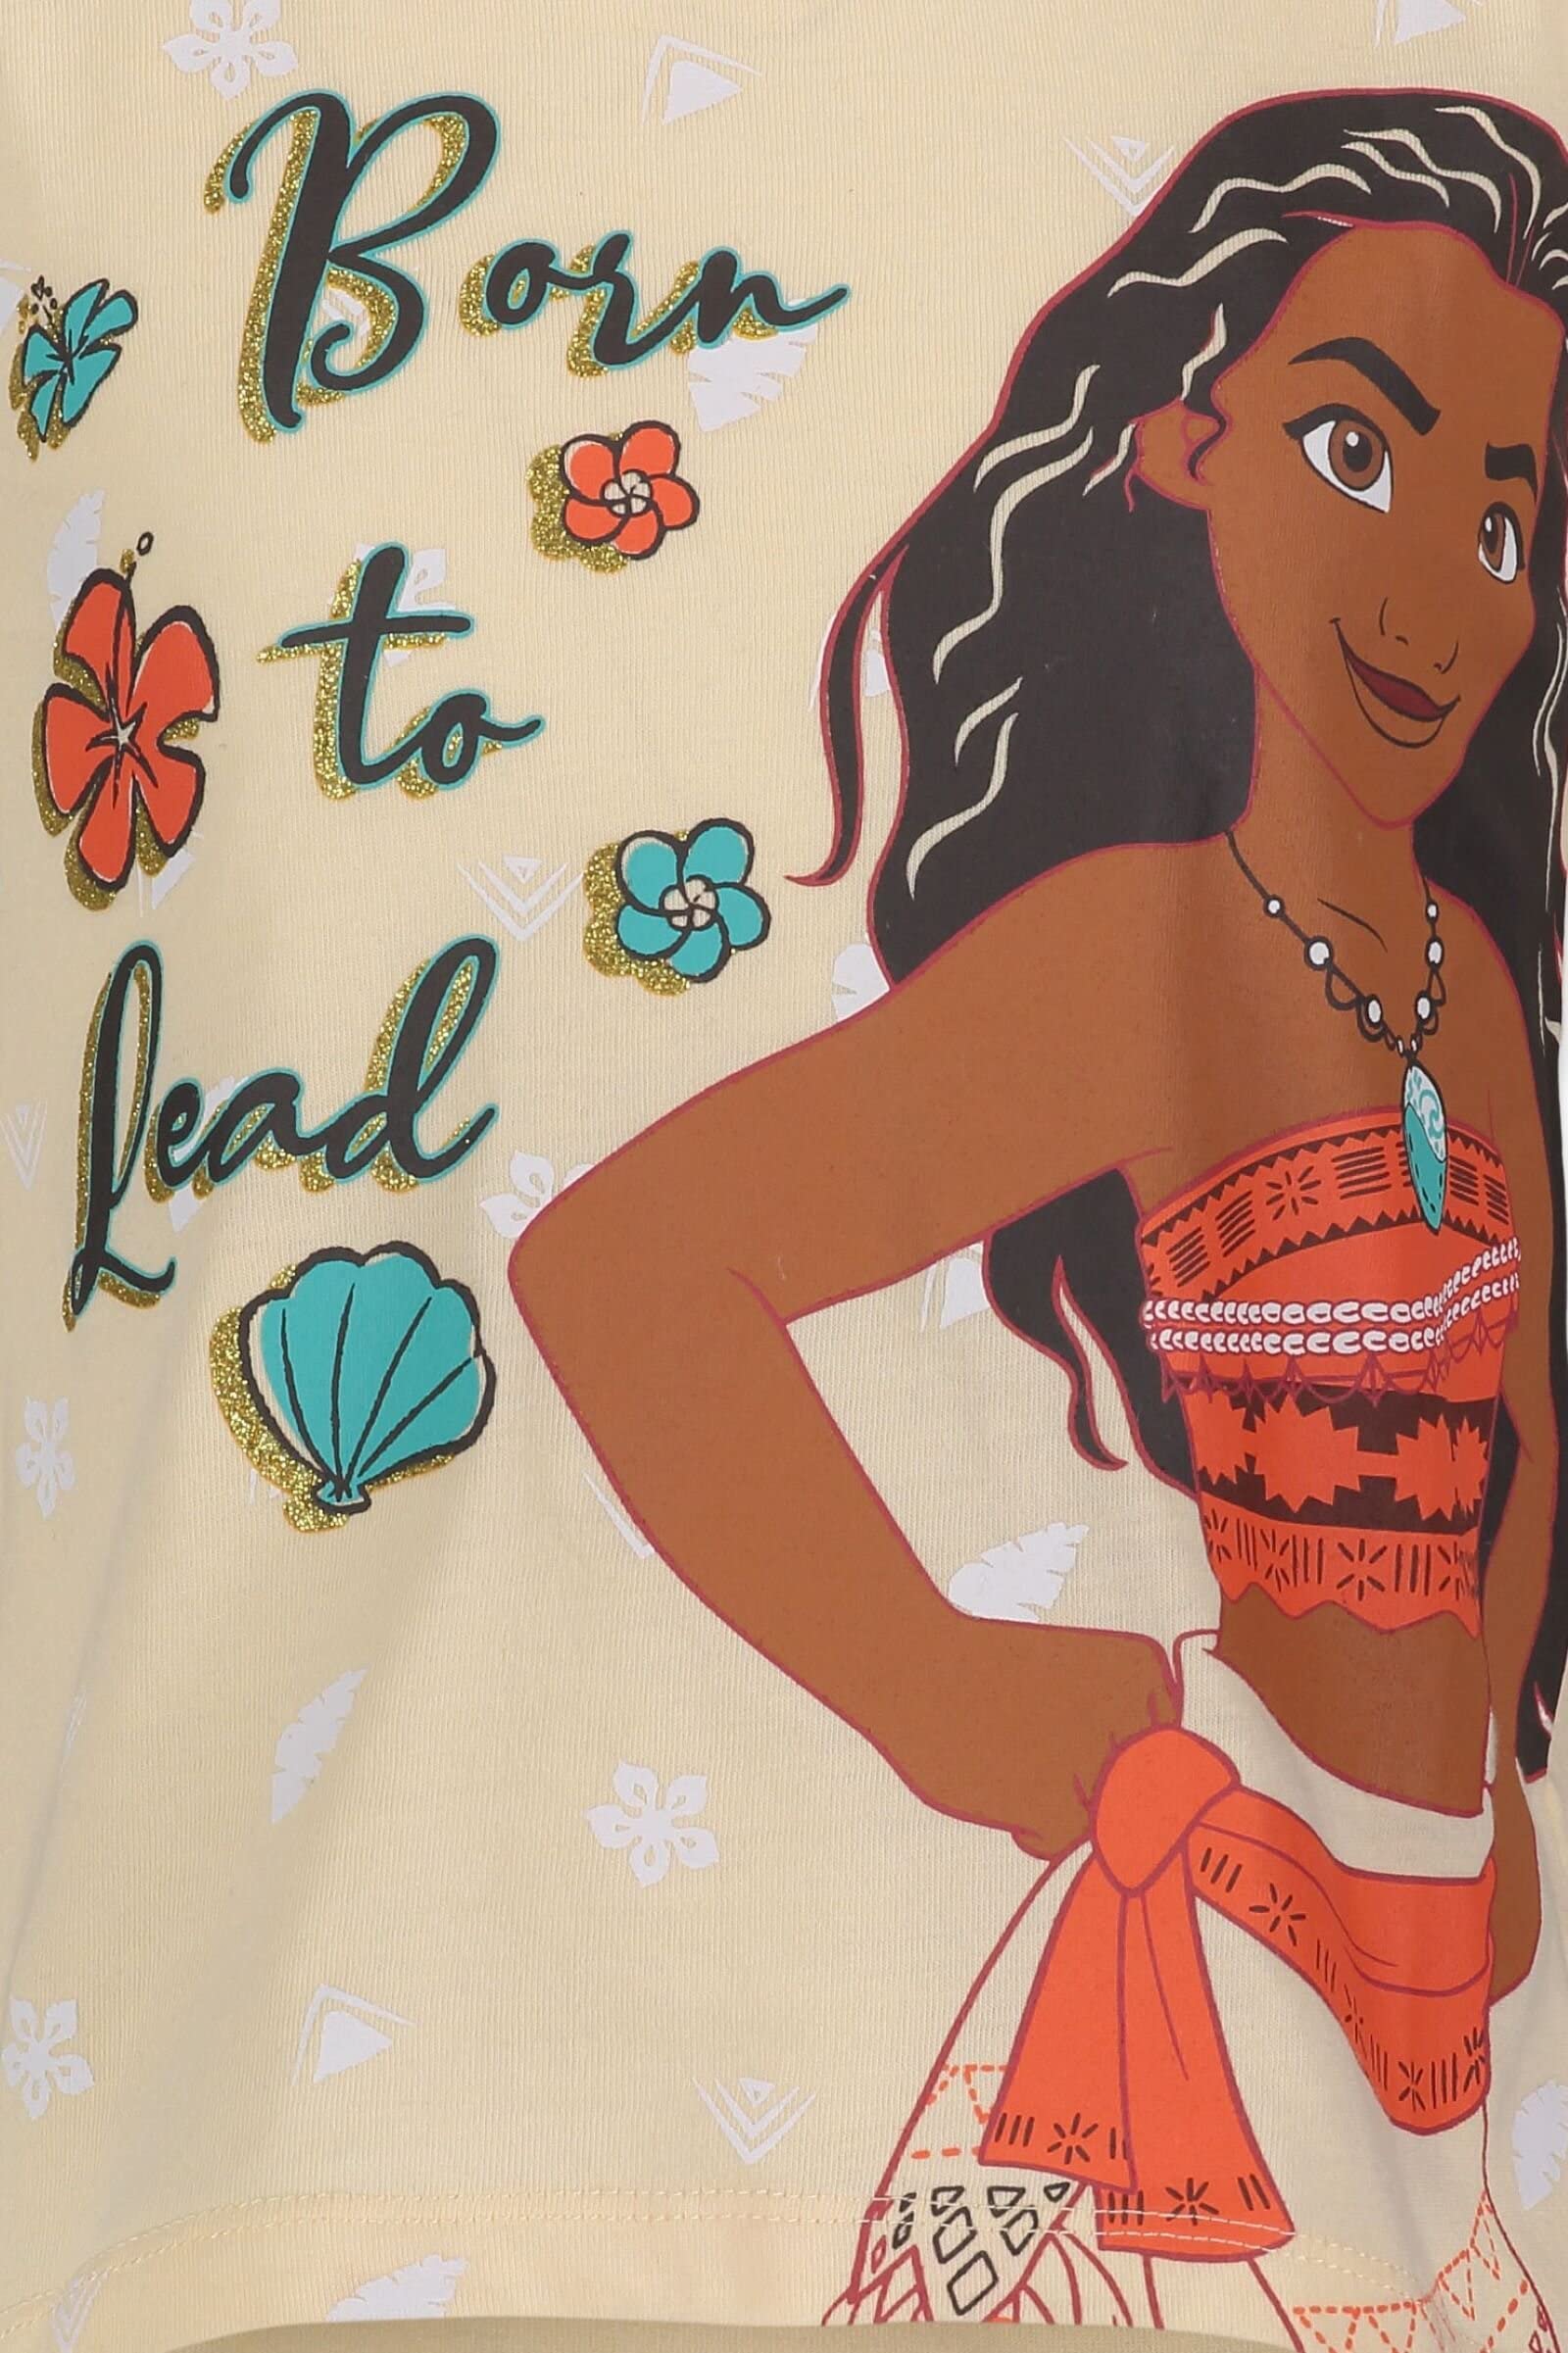 Disney Princess Mulan Rapunzel Moana Tiana 4 Pack Short Sleeve Graphic T-Shirt